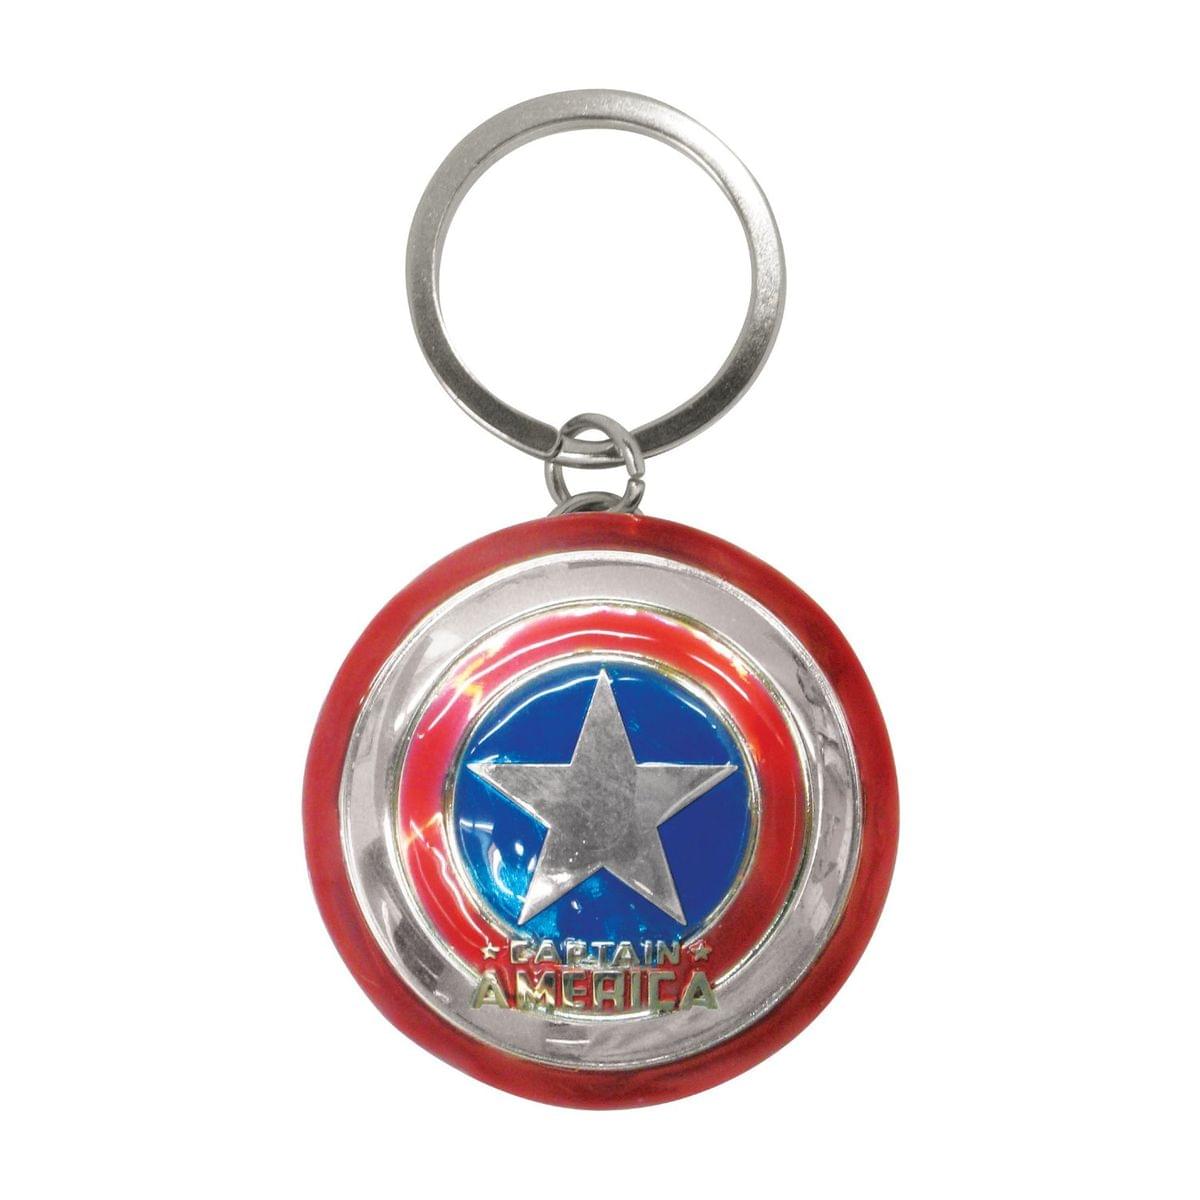 The Avengers Captain America Shield Key Ring